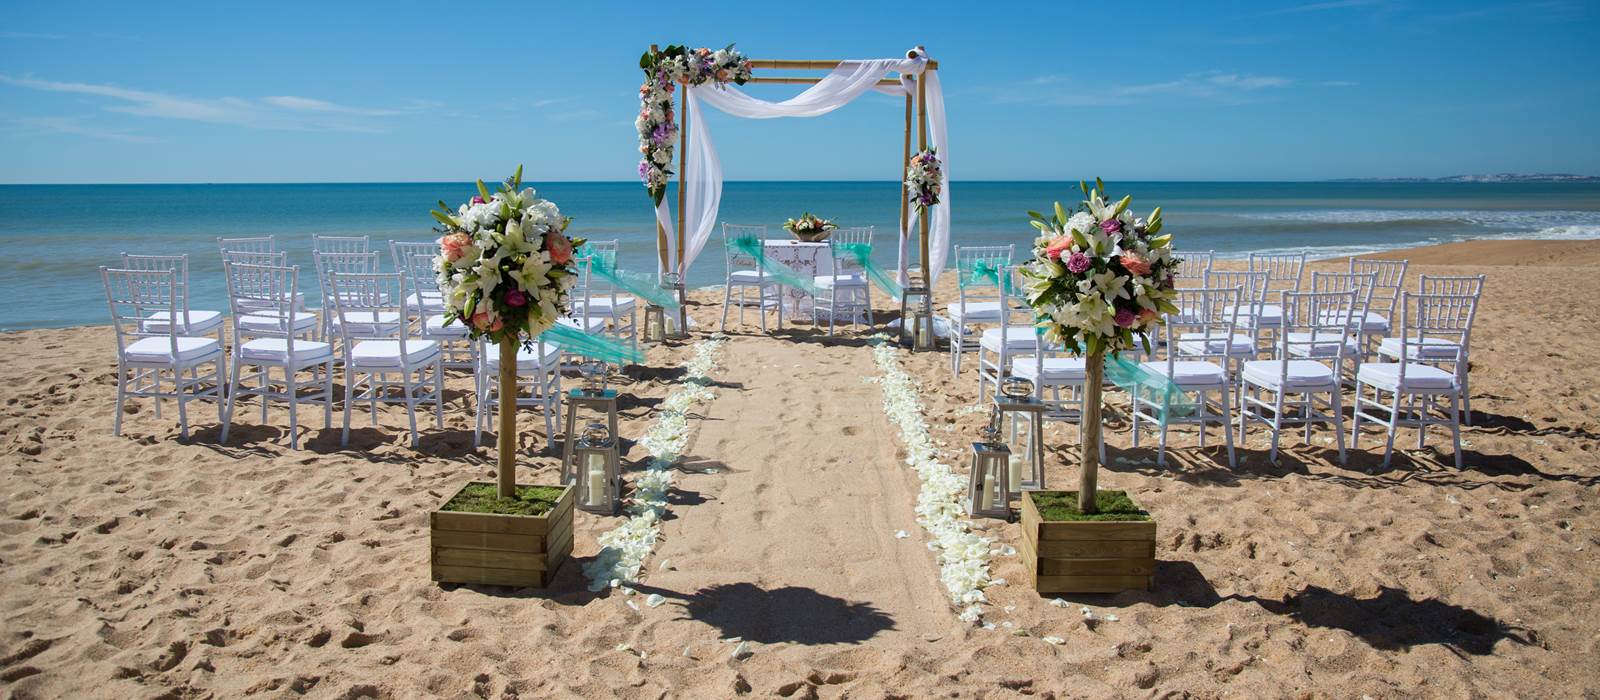 Dona Filipa Hotel Beach Wedding